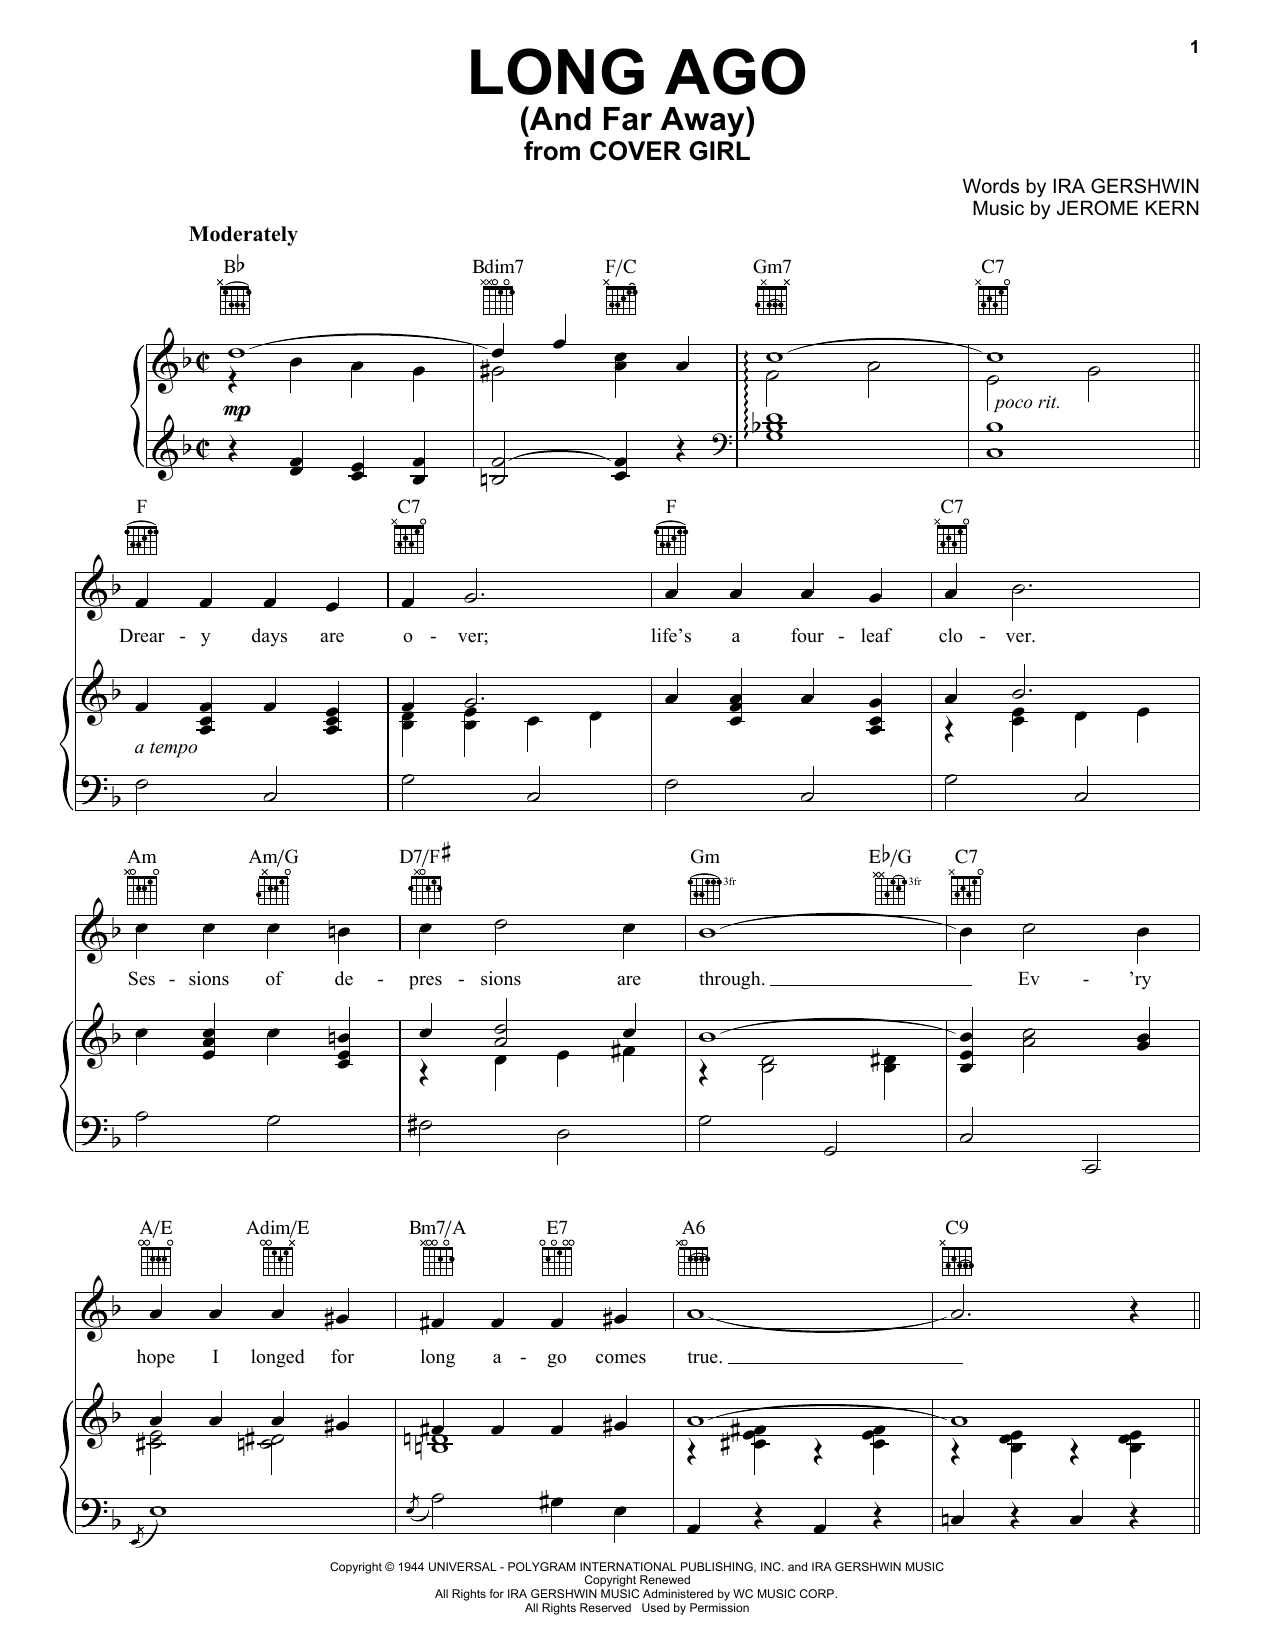 Ira Gershwin Long Ago (And Far Away) Sheet Music Notes & Chords for Alto Saxophone - Download or Print PDF